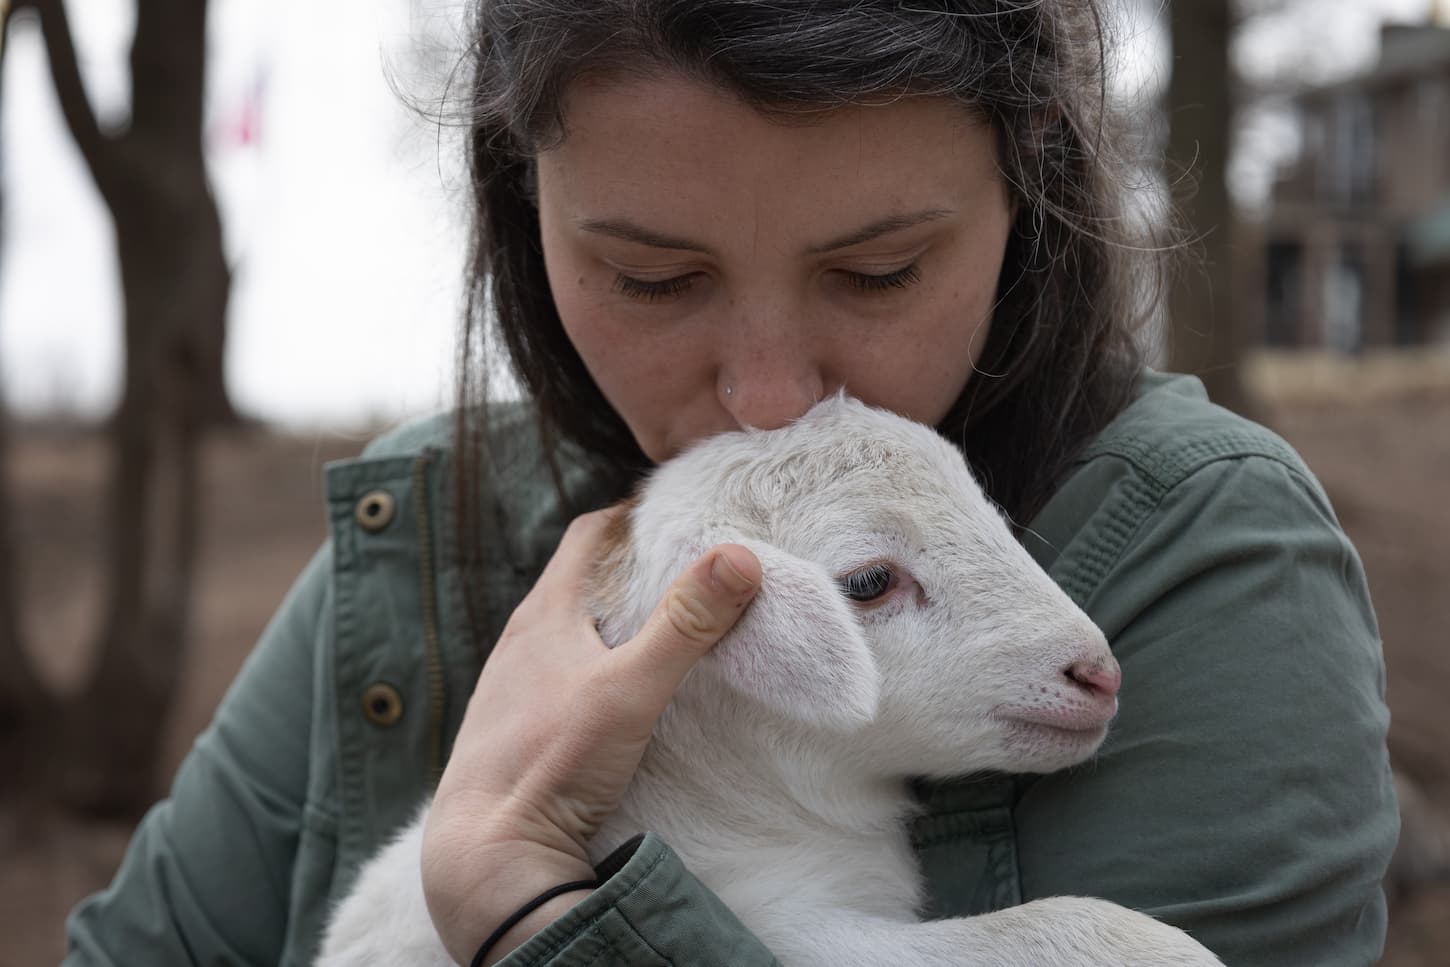 An image of a farmer holding a newborn lamb.